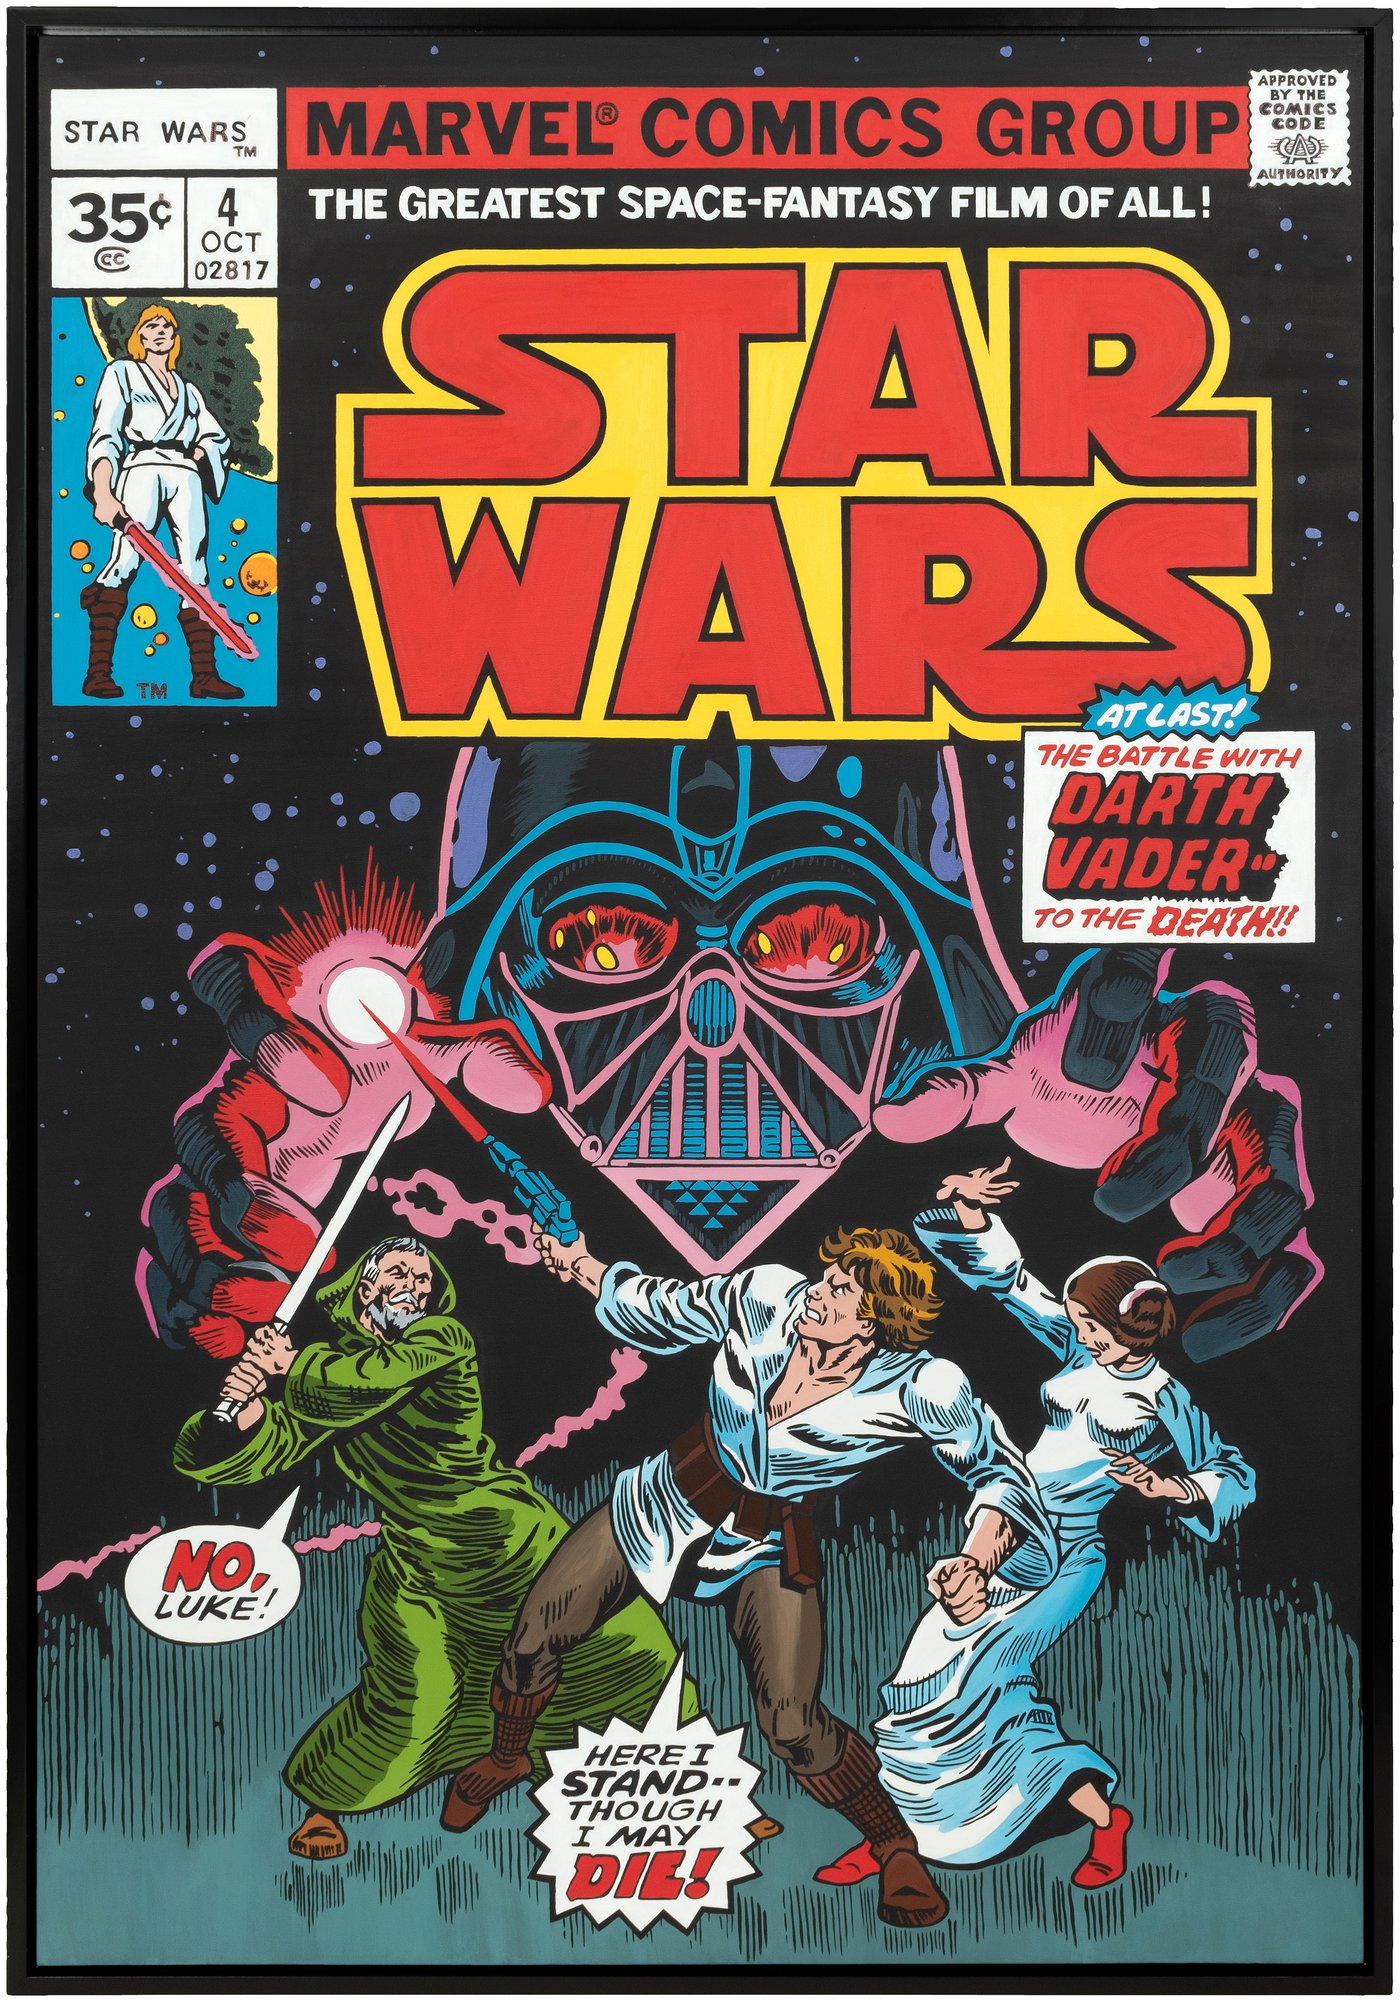 Hake's - STAR WARS #4 MARVEL COMIC BOOK COVER RECREATION PAINTING ORIGINAL  ART BY NICOLE PETRILLO.